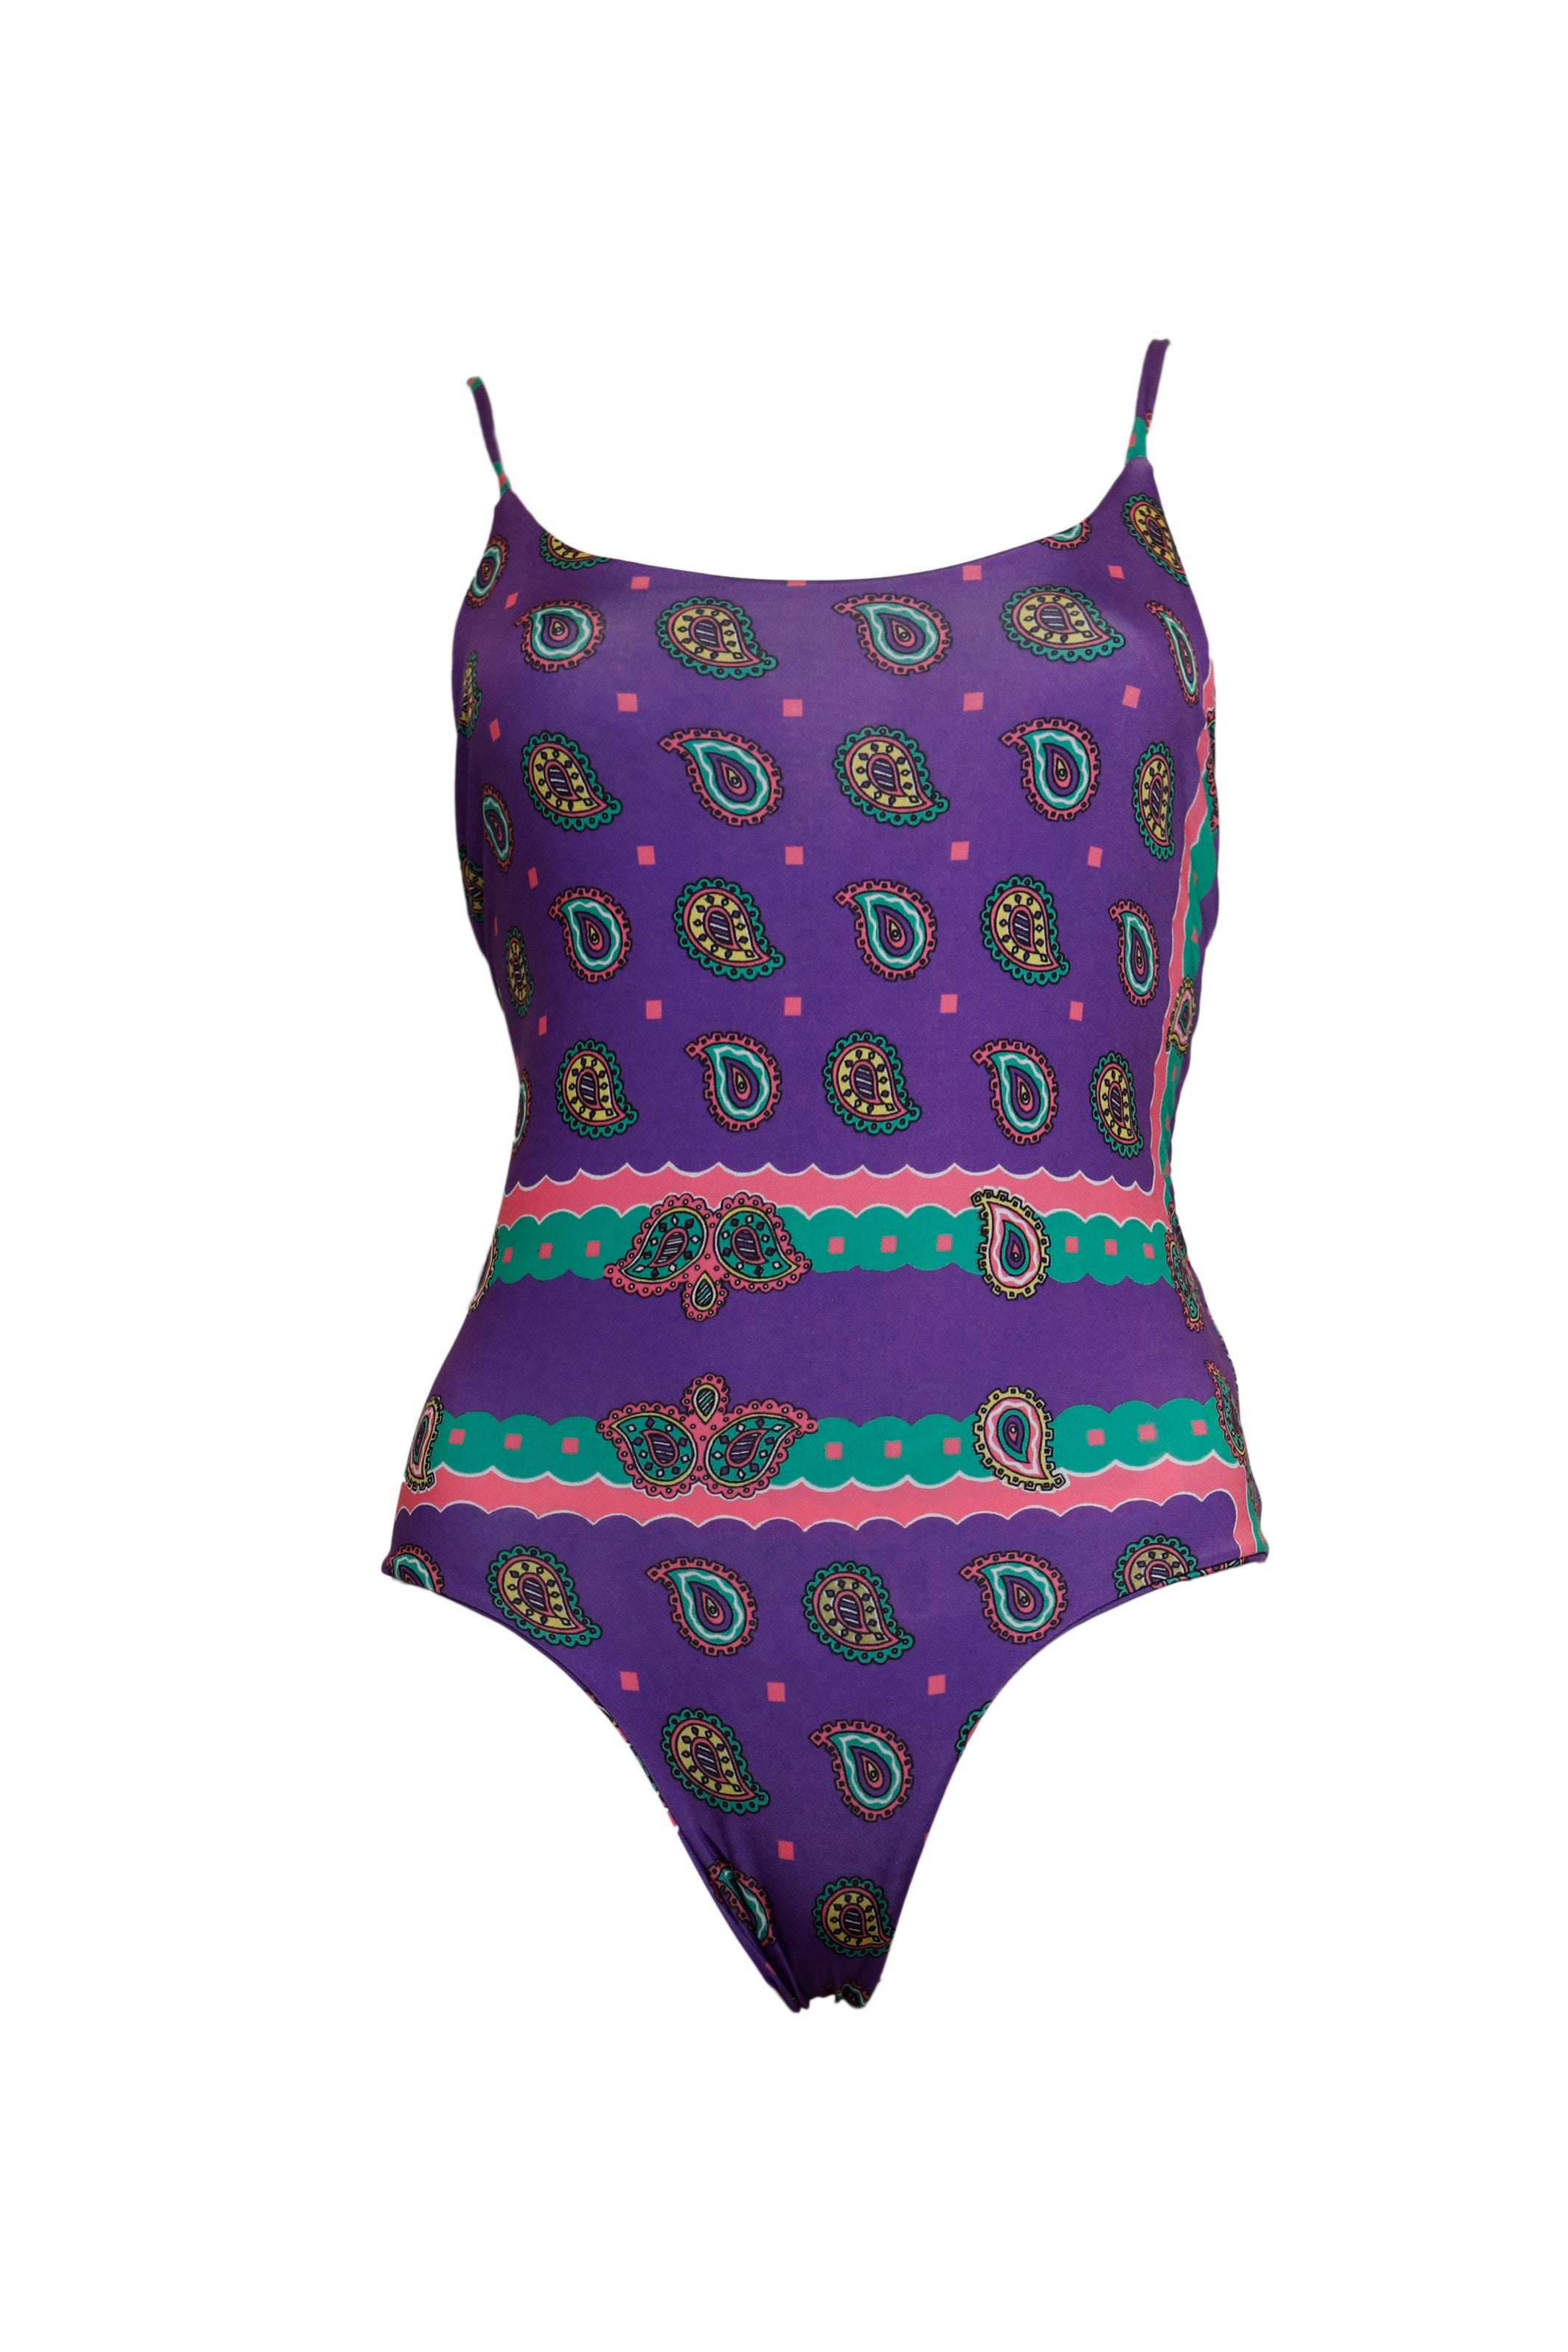 FEDERICA - one-piece swimsuit in purple Ibiza bandana print lycra